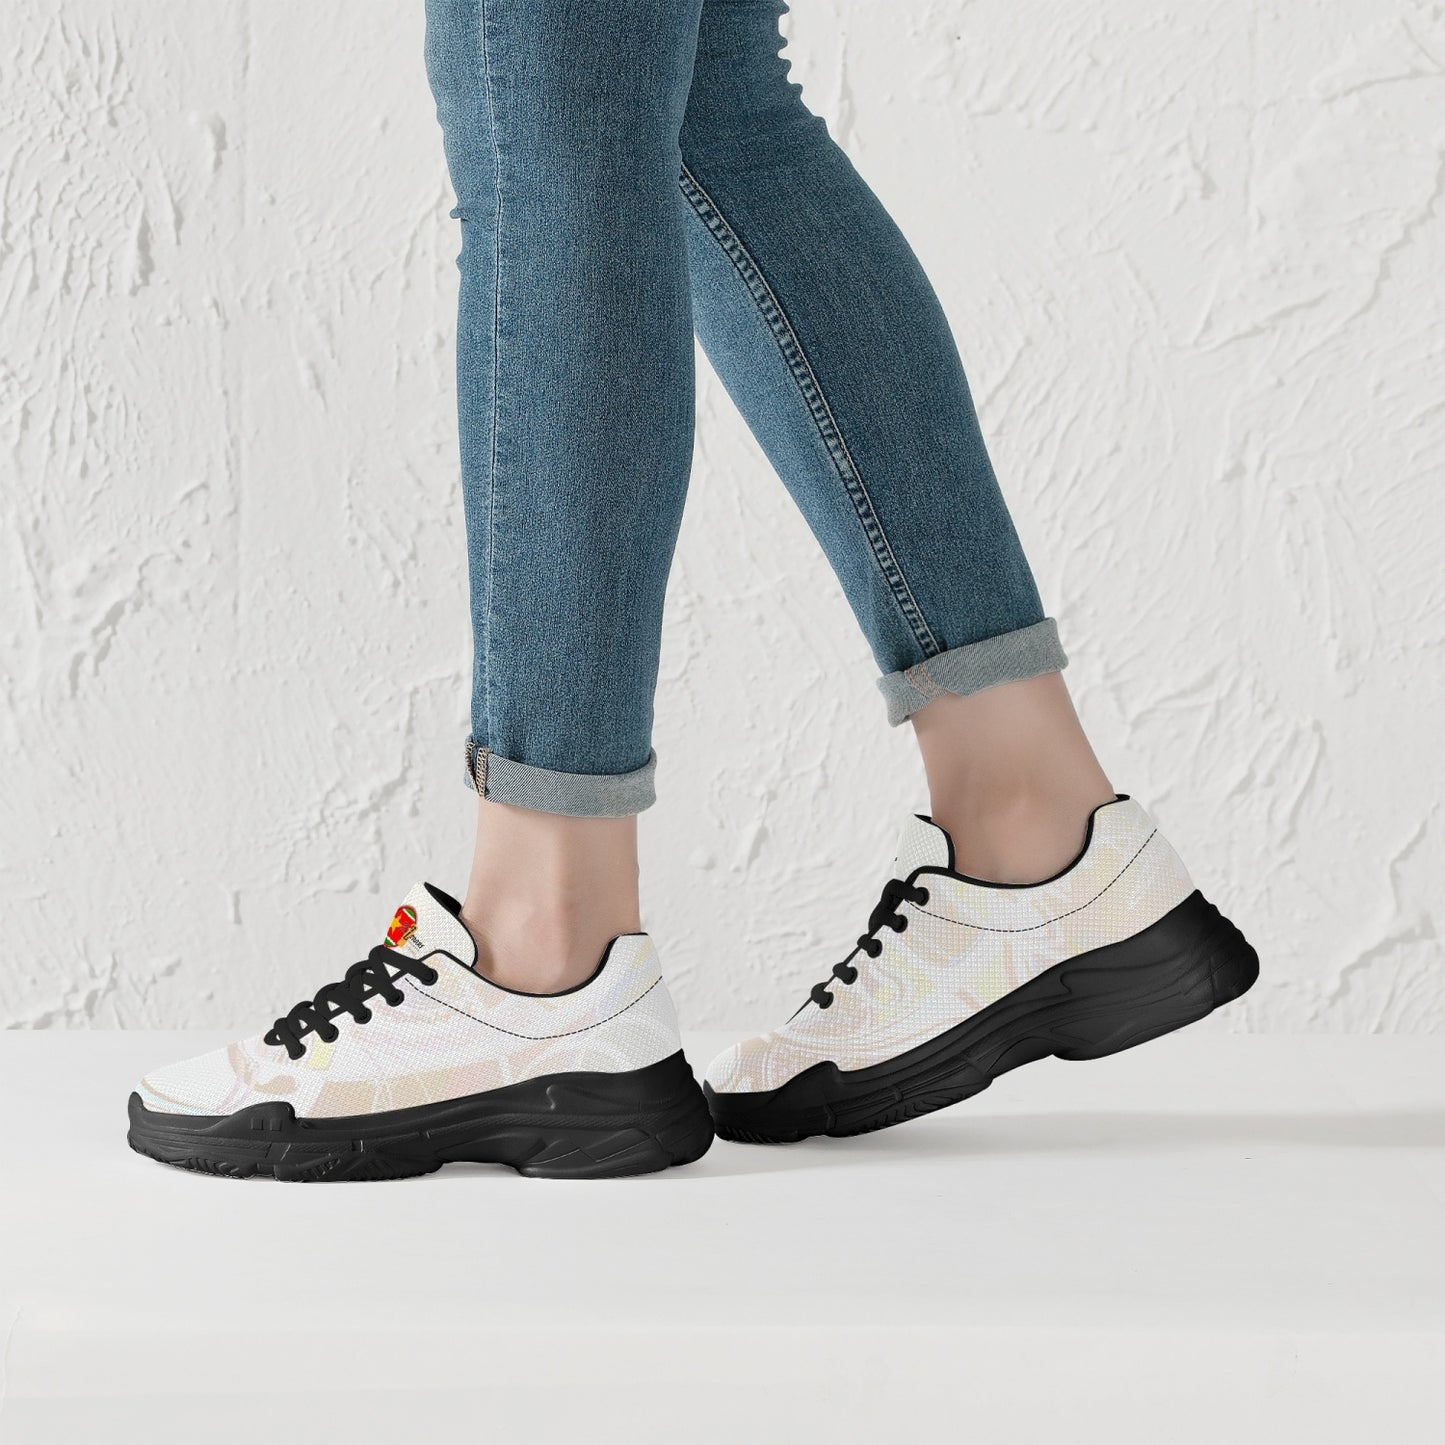 Unisex sneakers "Cream" (White / Black)